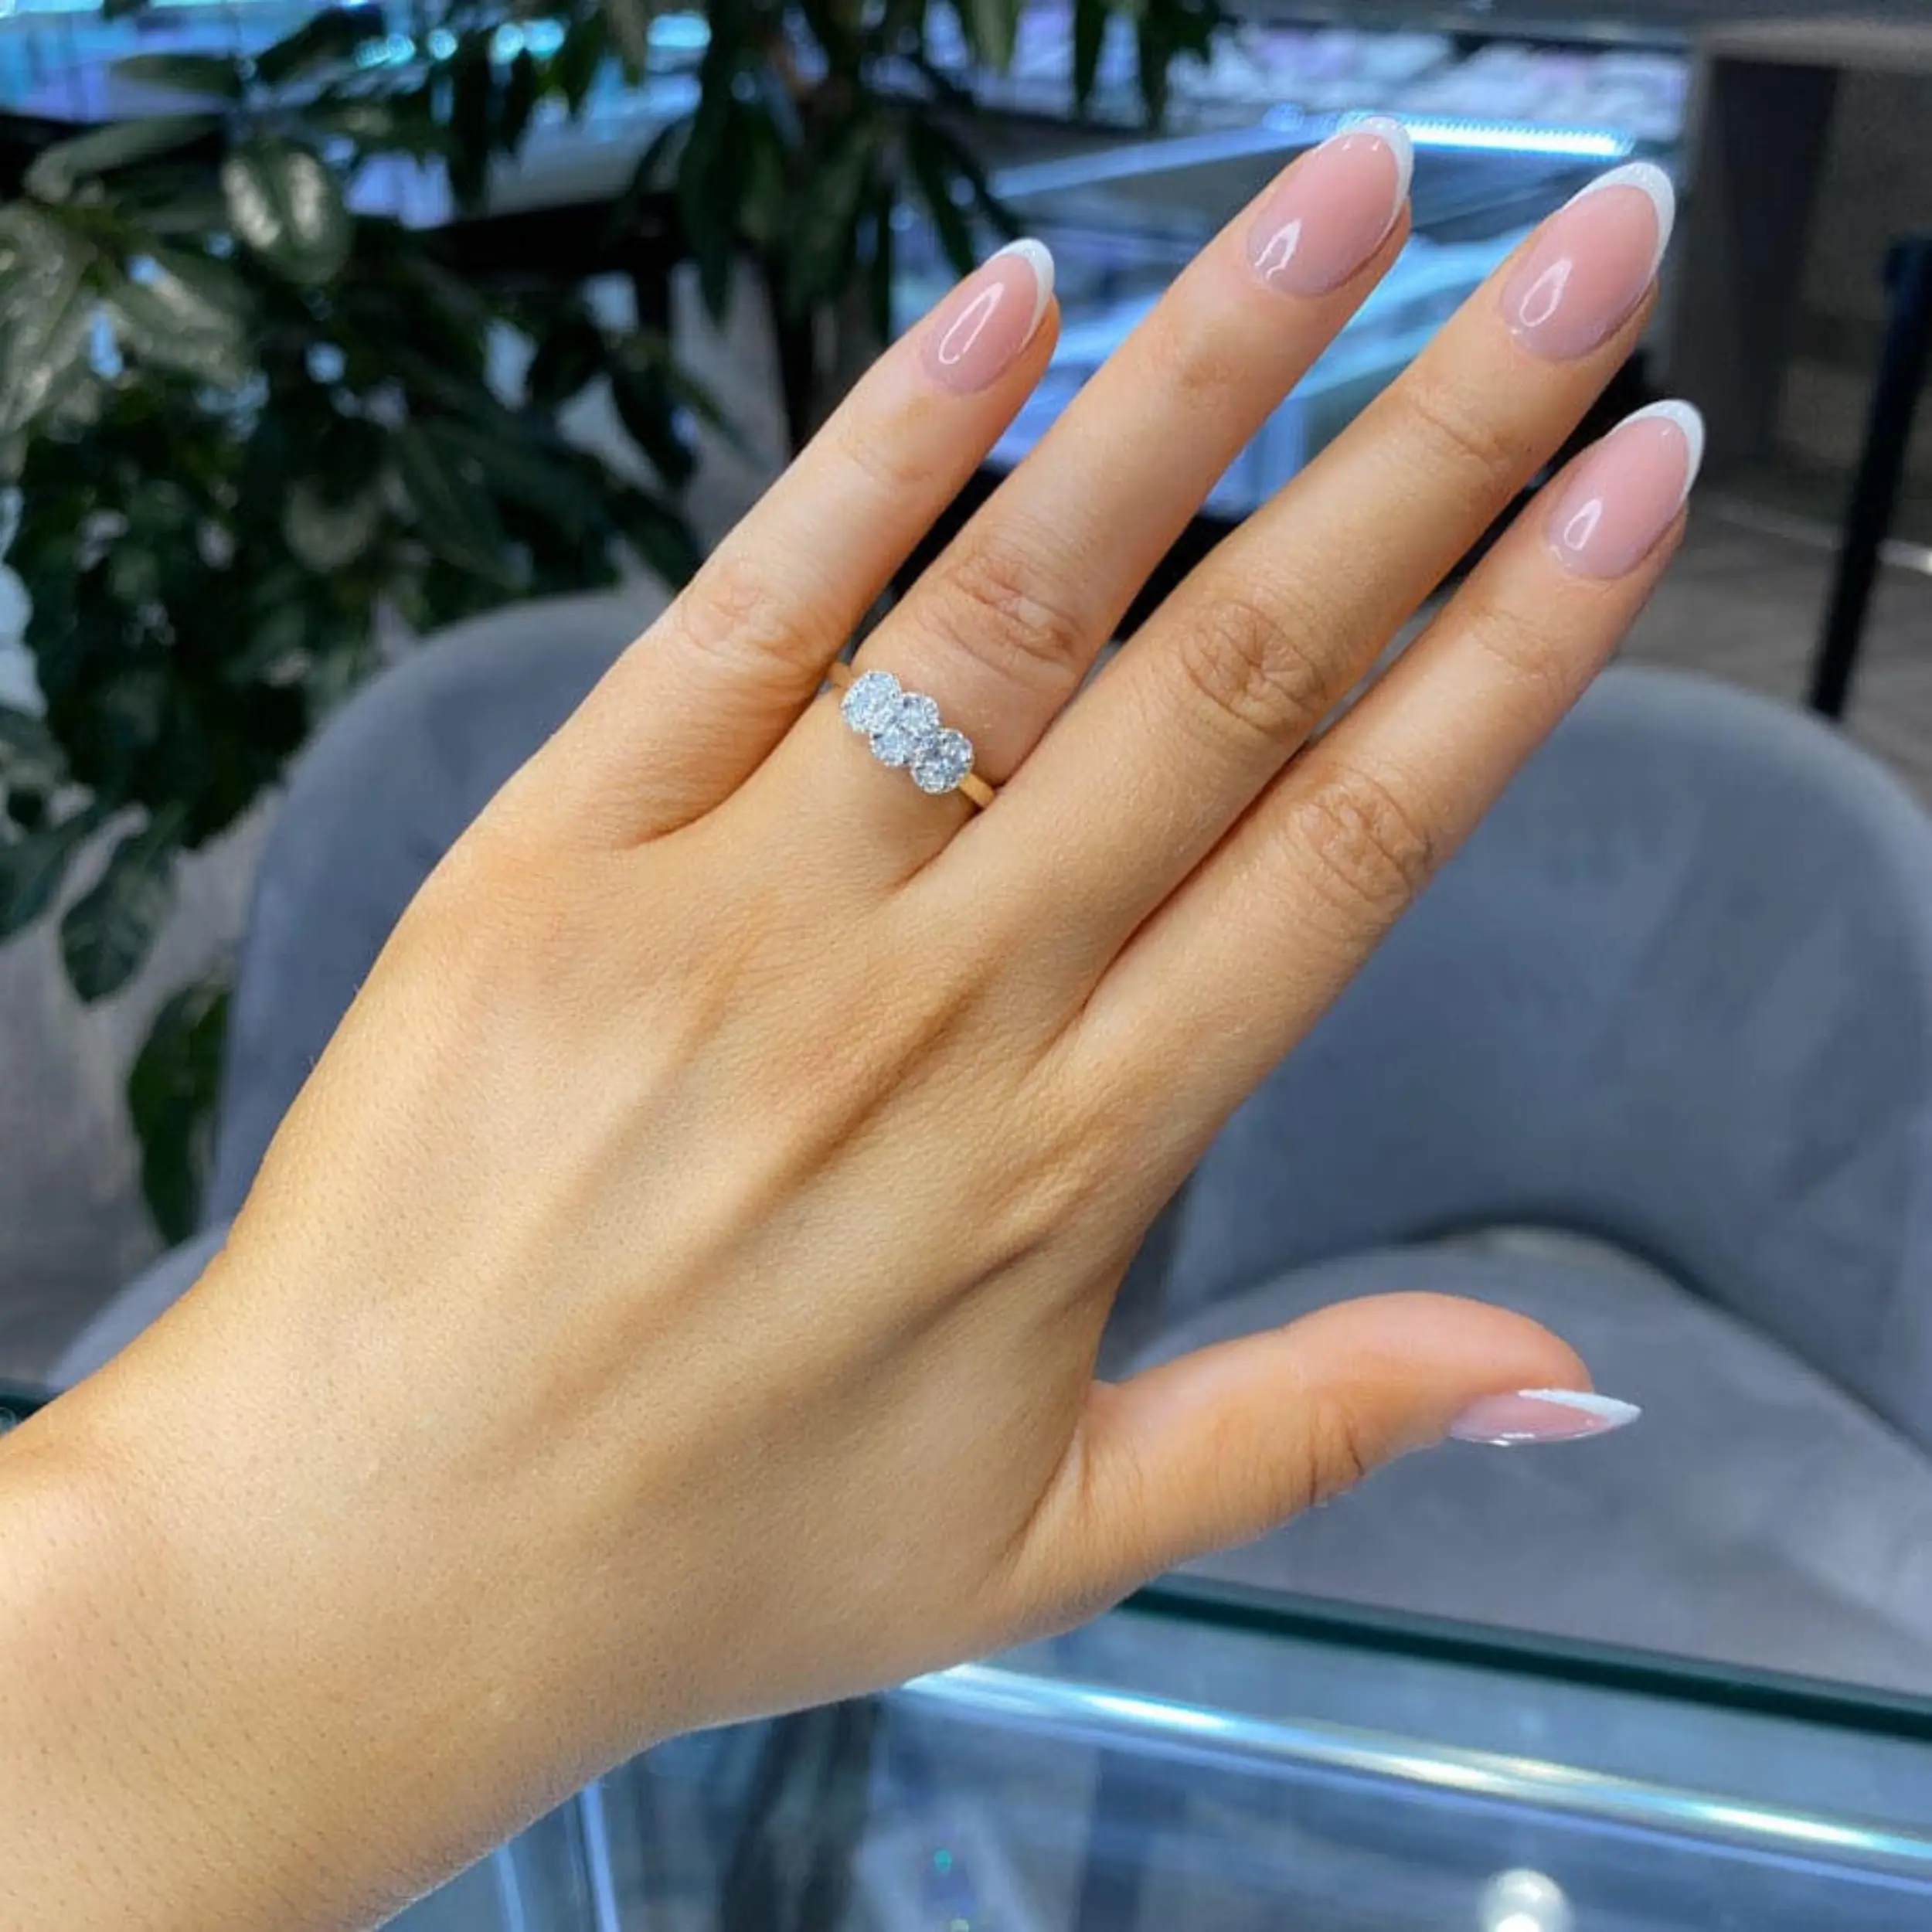 3 stone engagement ring